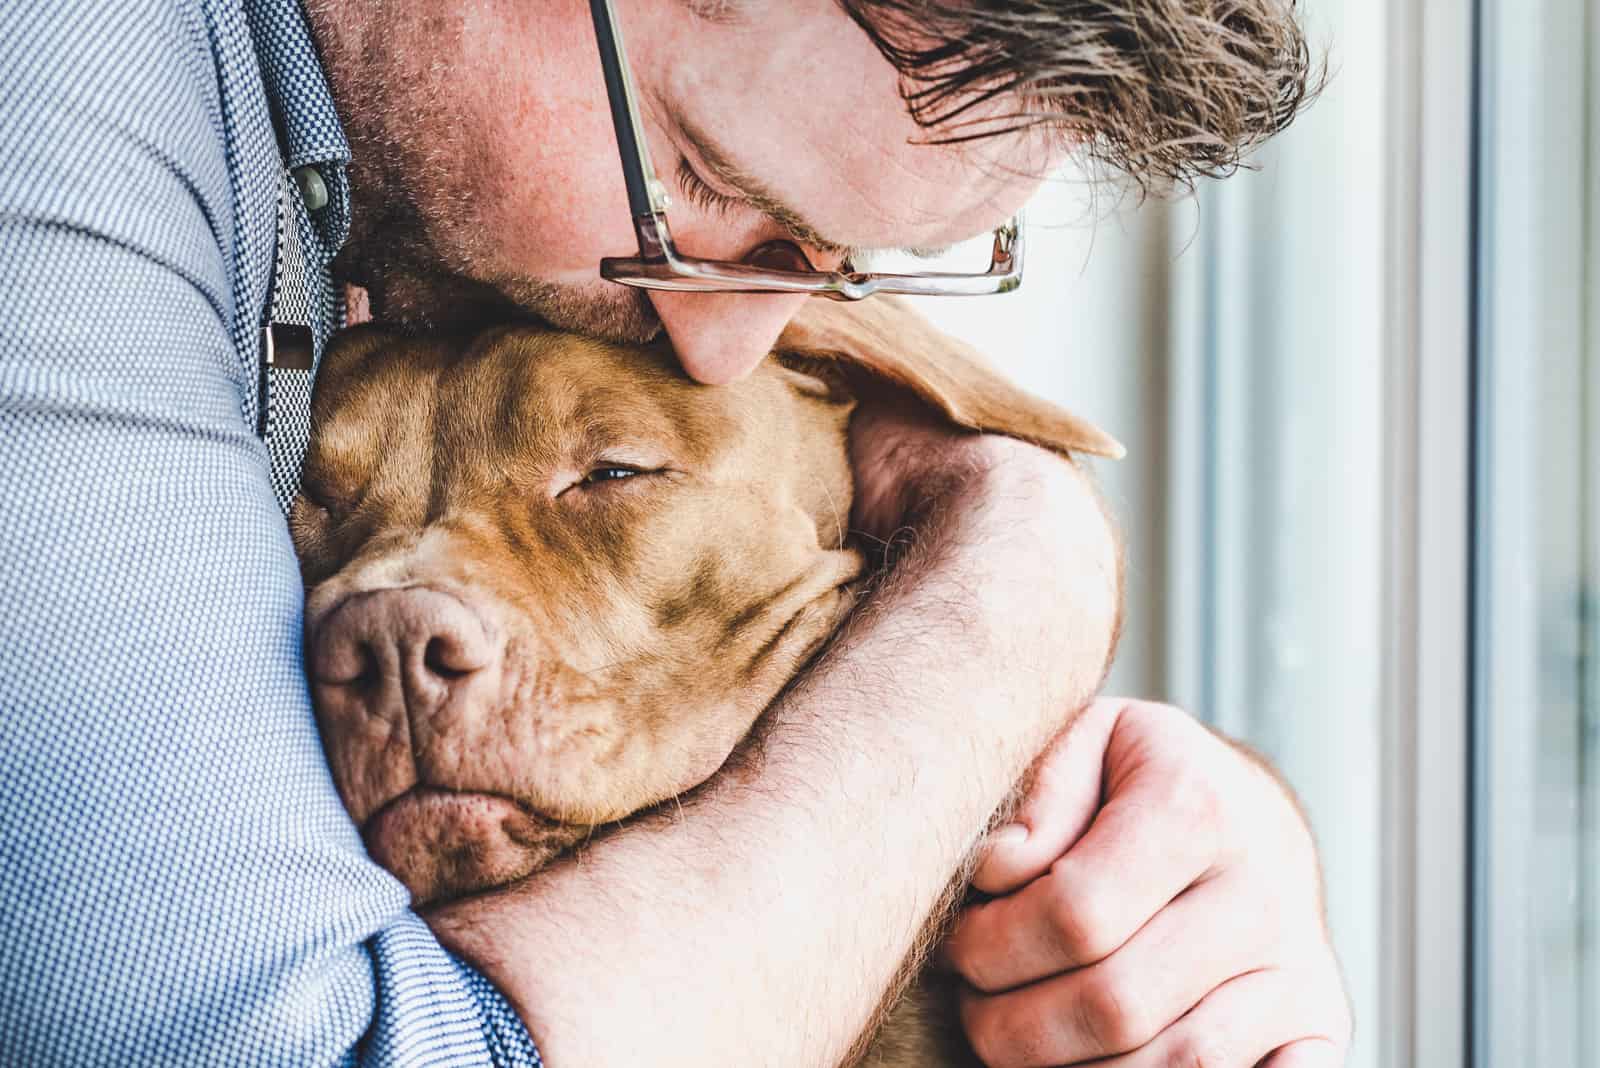 owner smelling his dog